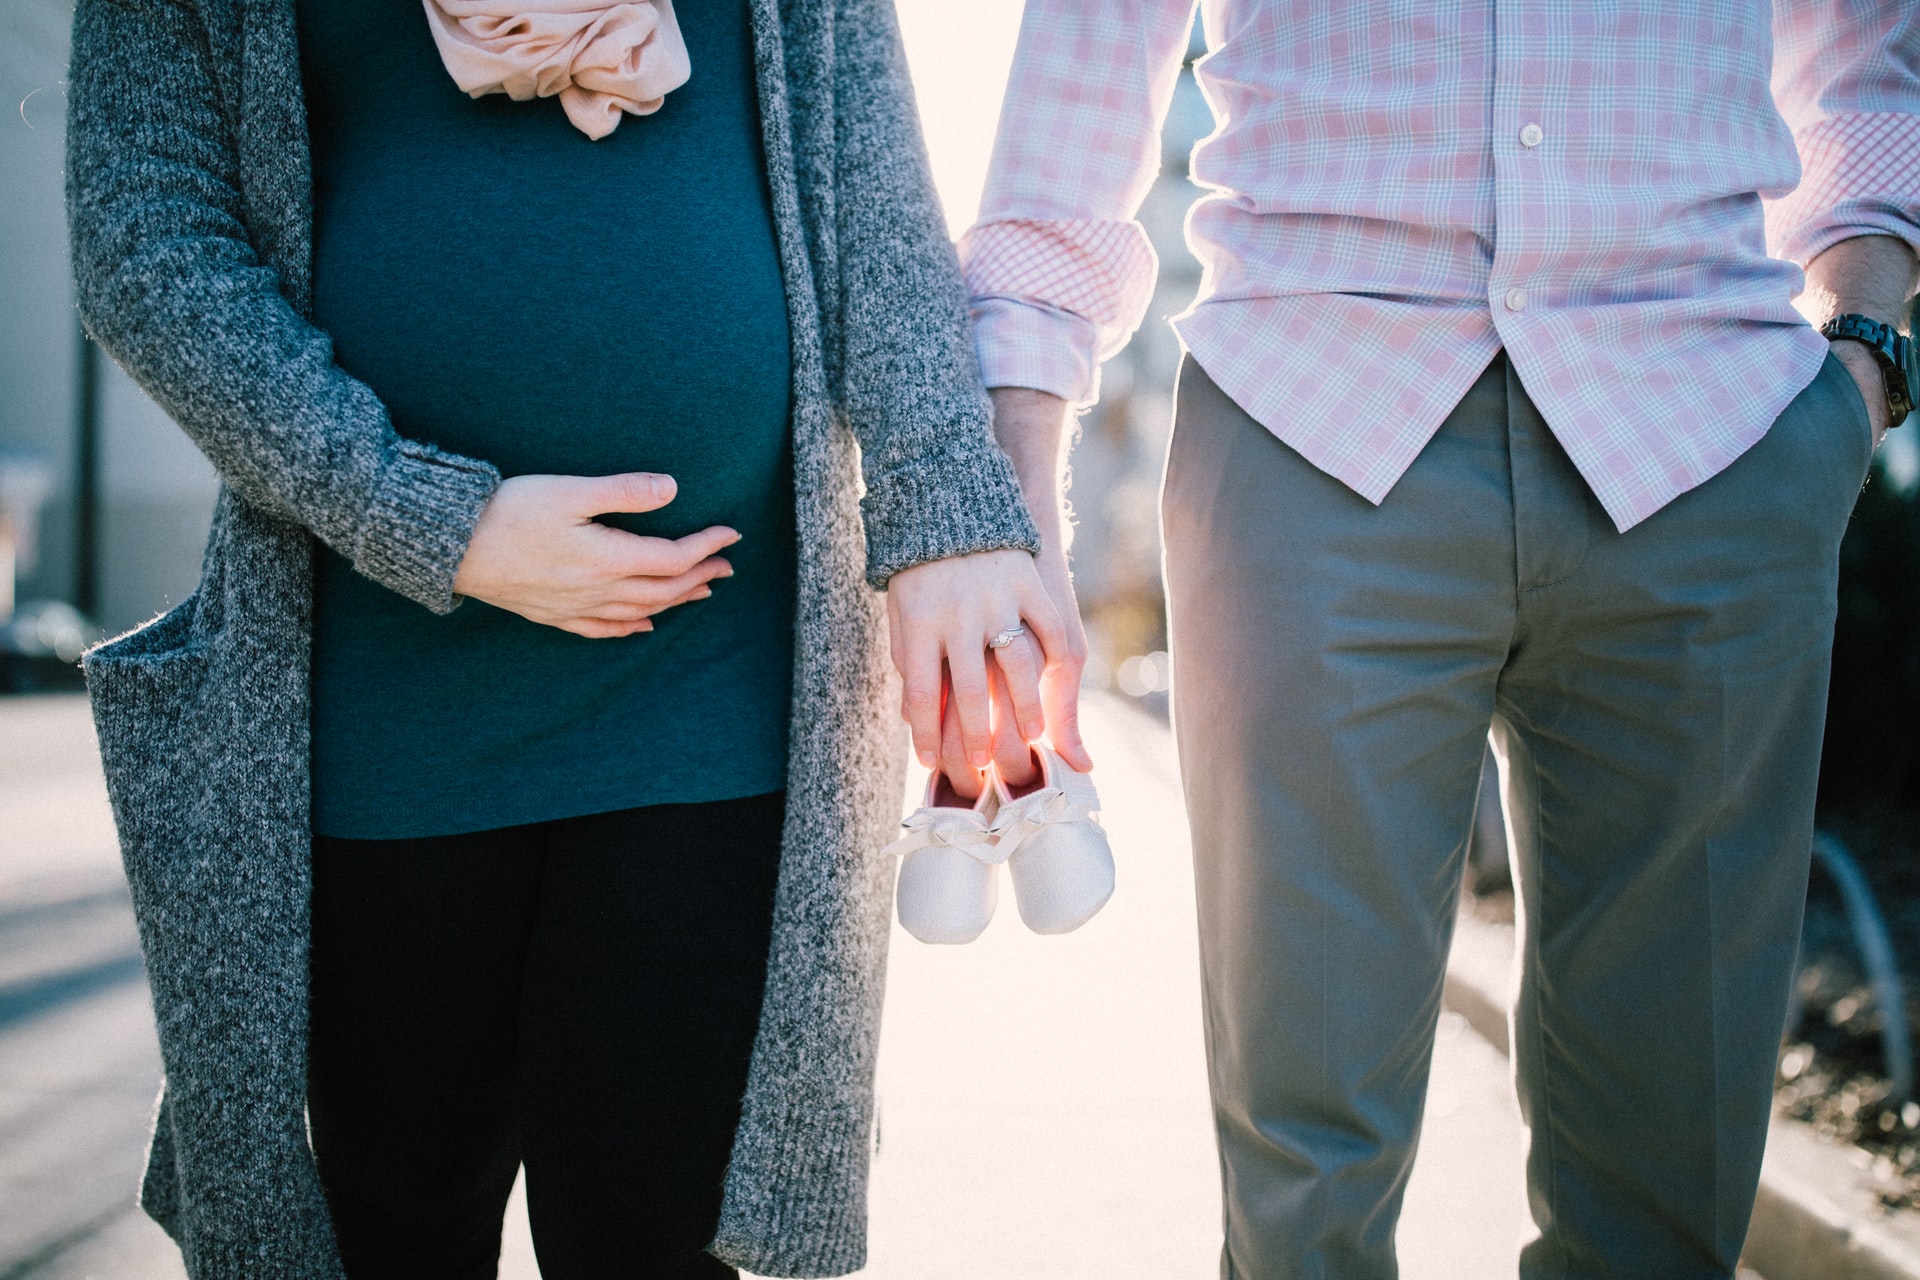 Kicking in Pregnancy - When Does It Start?